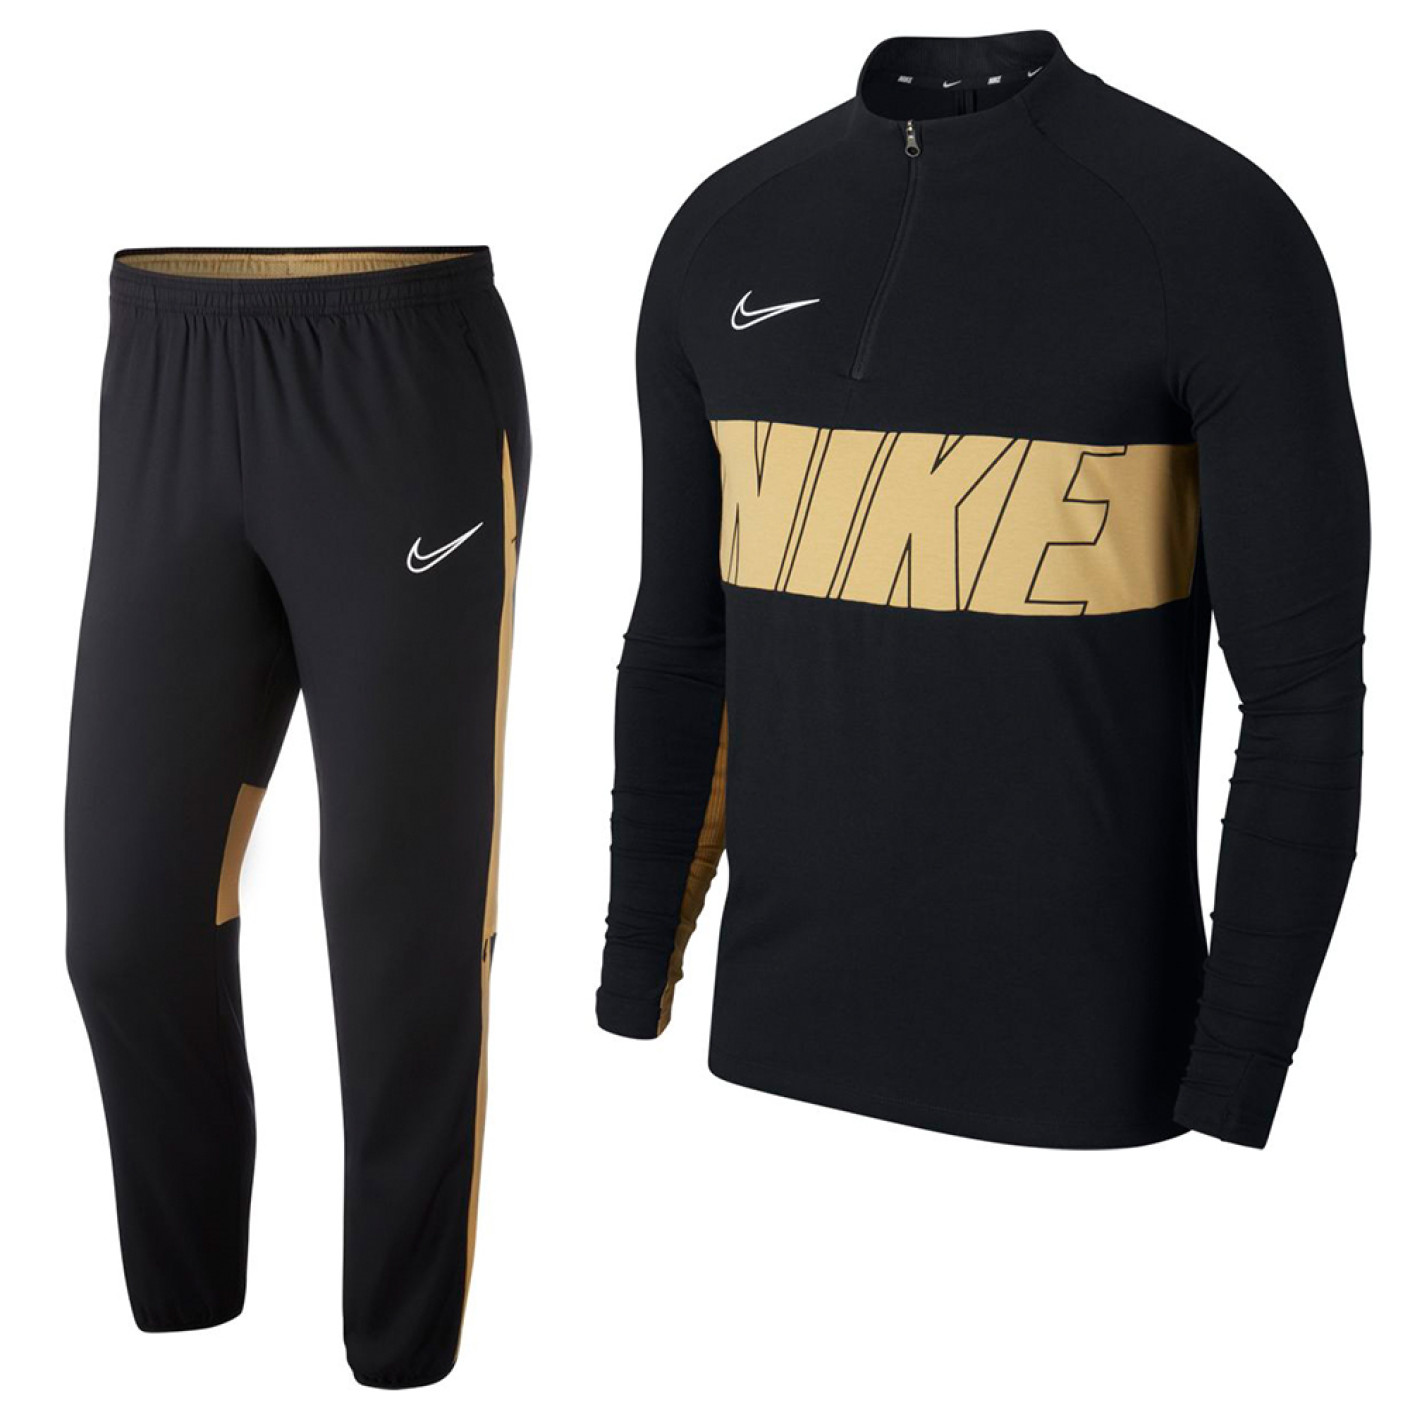 Nike Dry Academy Trainingspak Zwart Goud Zwart